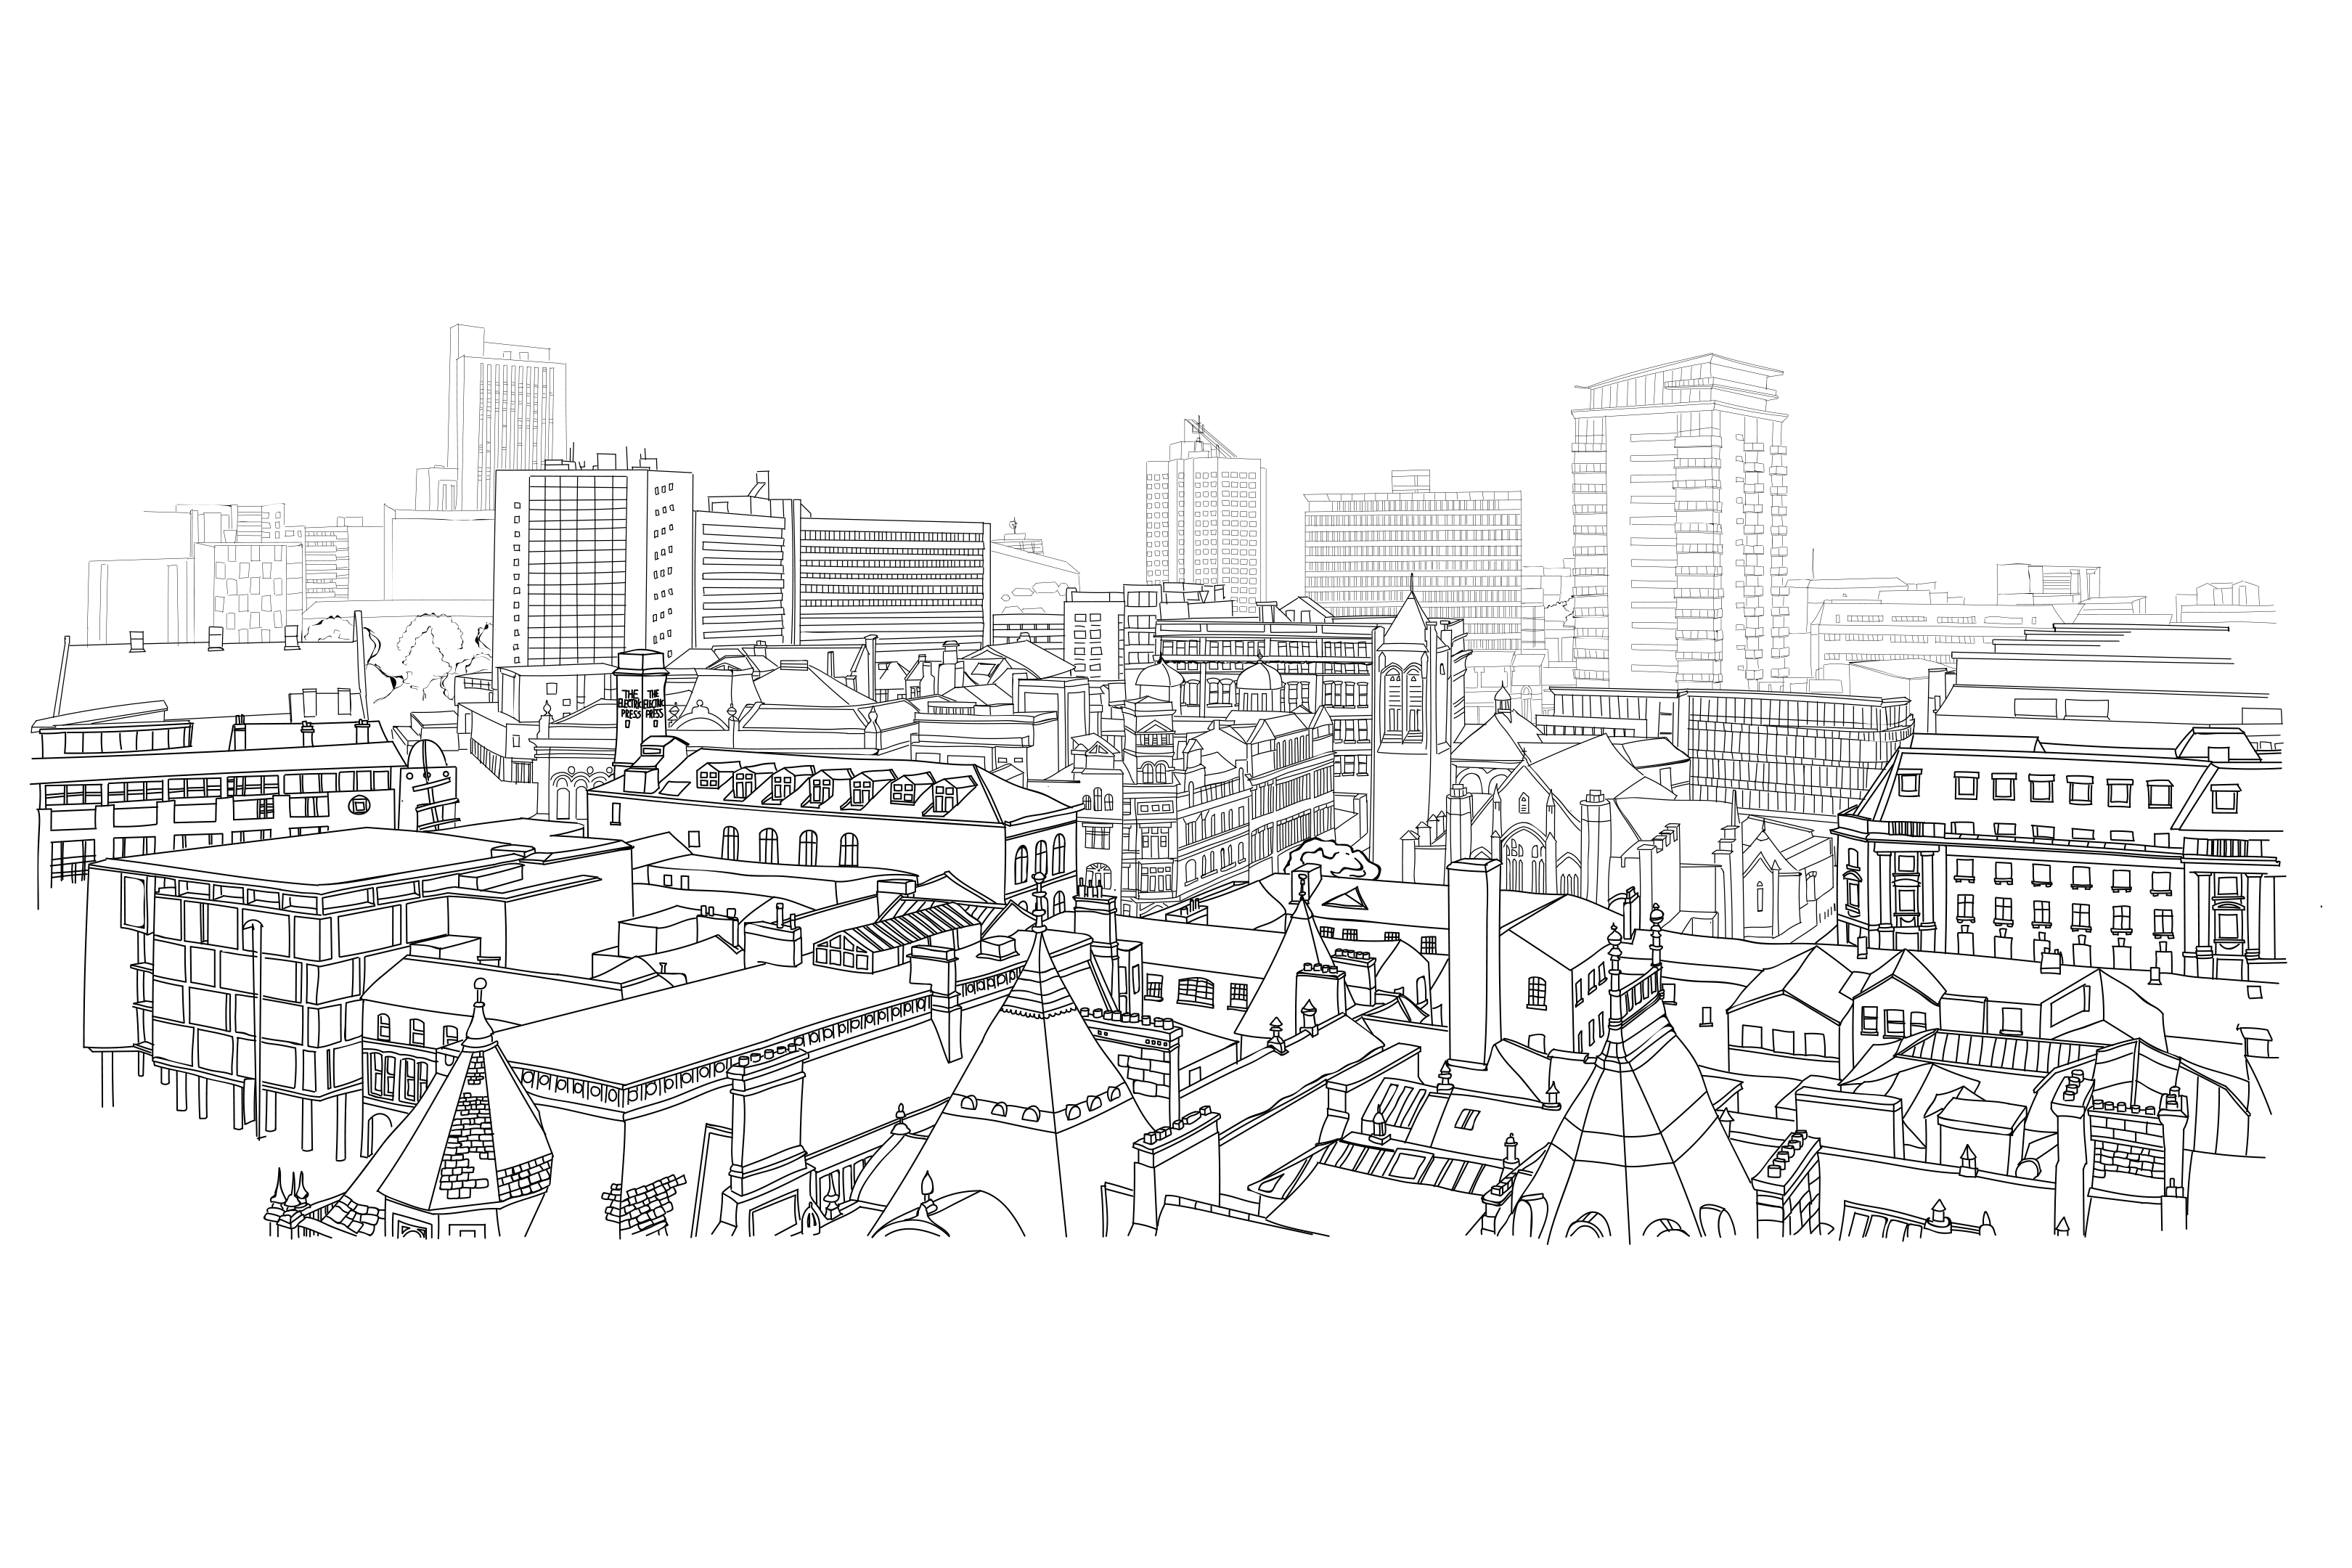 Illustration of Leeds done by Woven illustrator and junior designer, Chloe Greenwood